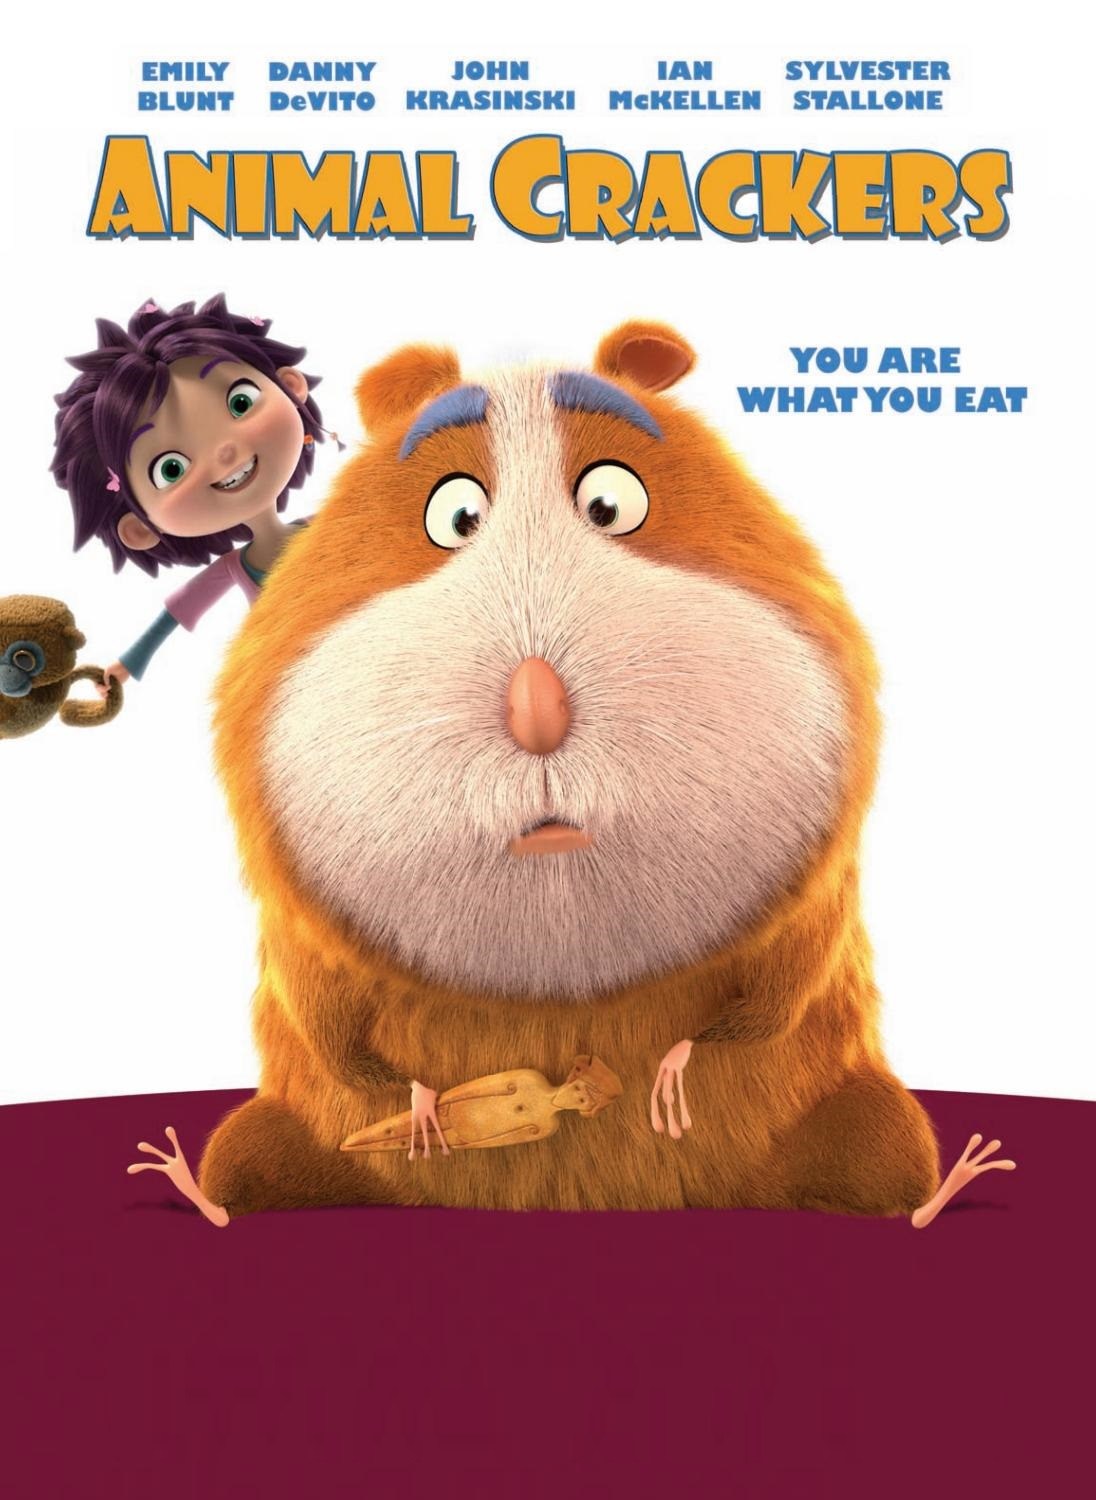 animal crackers movie